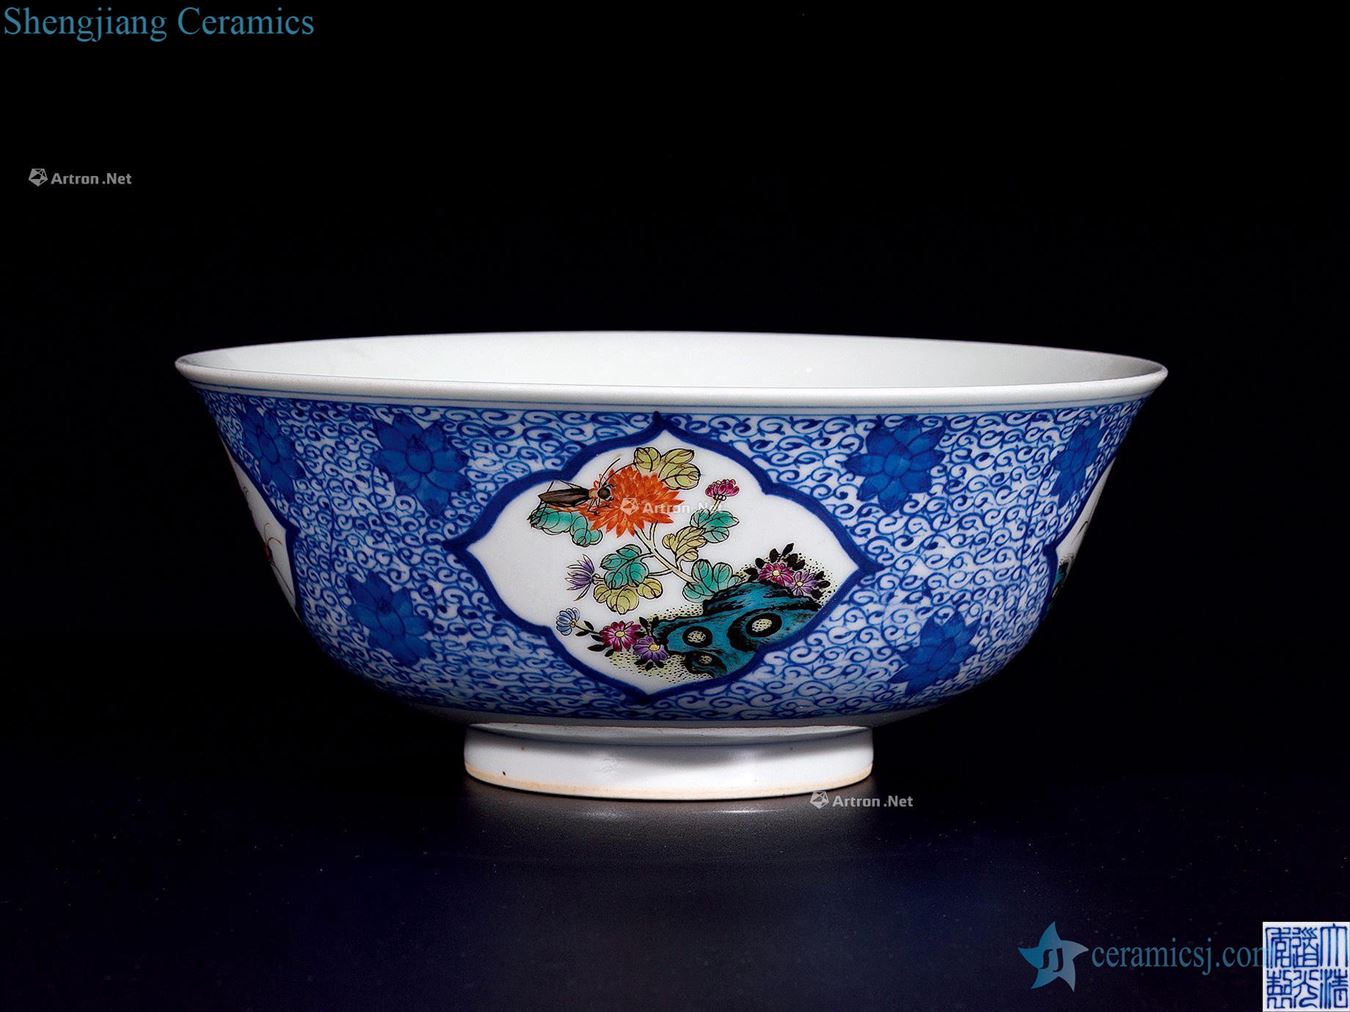 Qing porcelain medallion pastel figure bowl of Chinese caterpillar fungus